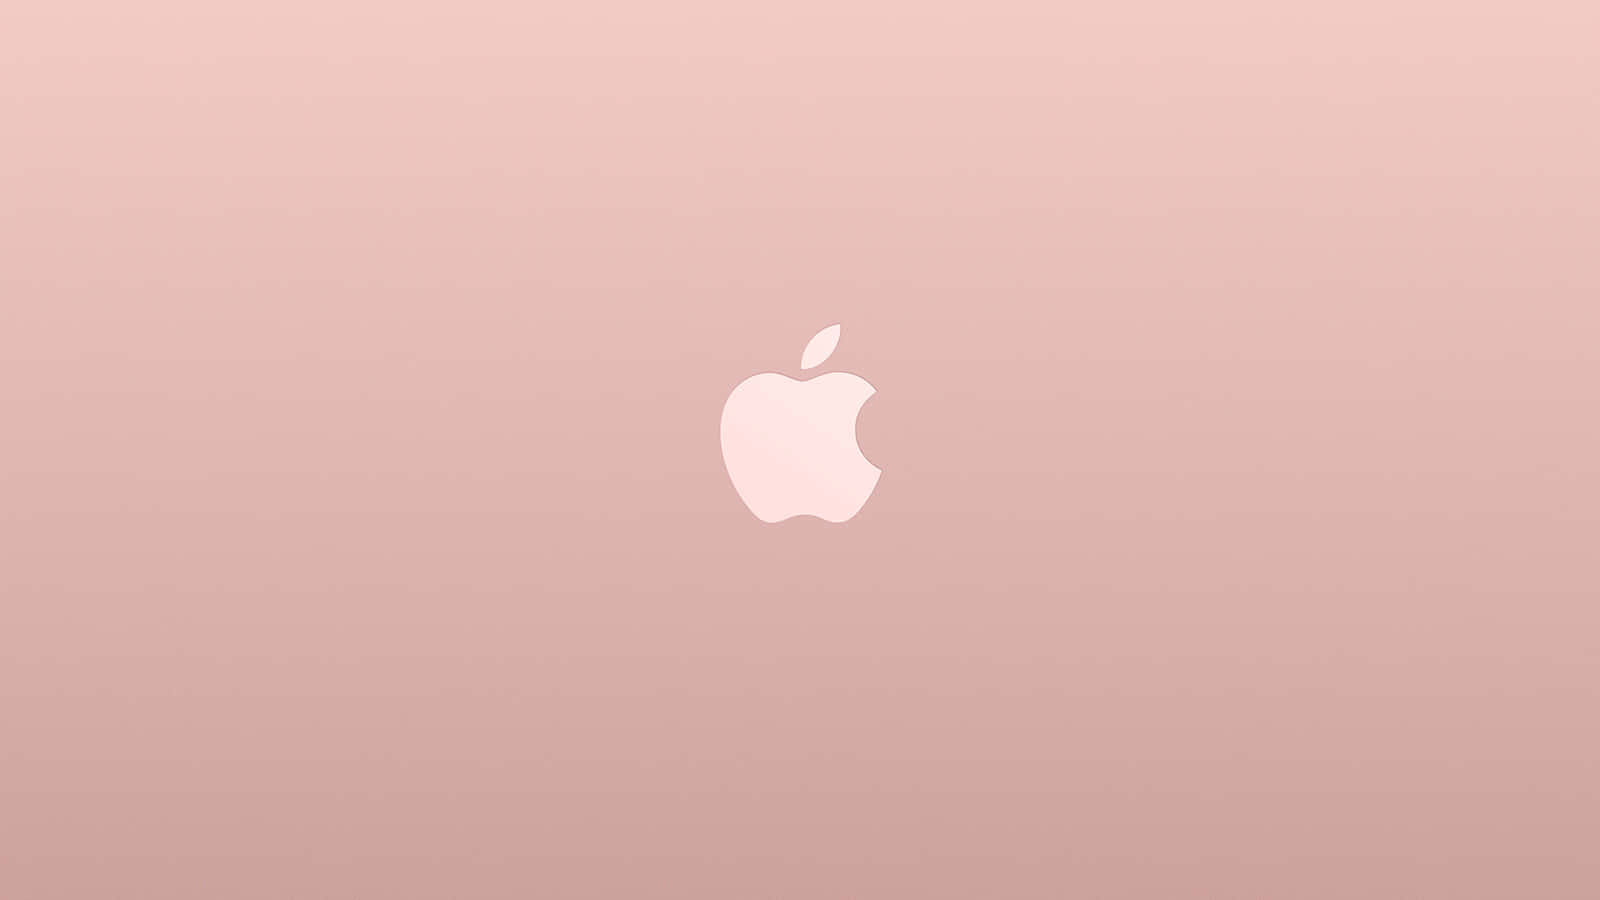 Simple Rose Gold Apple Desktop Wallpaper